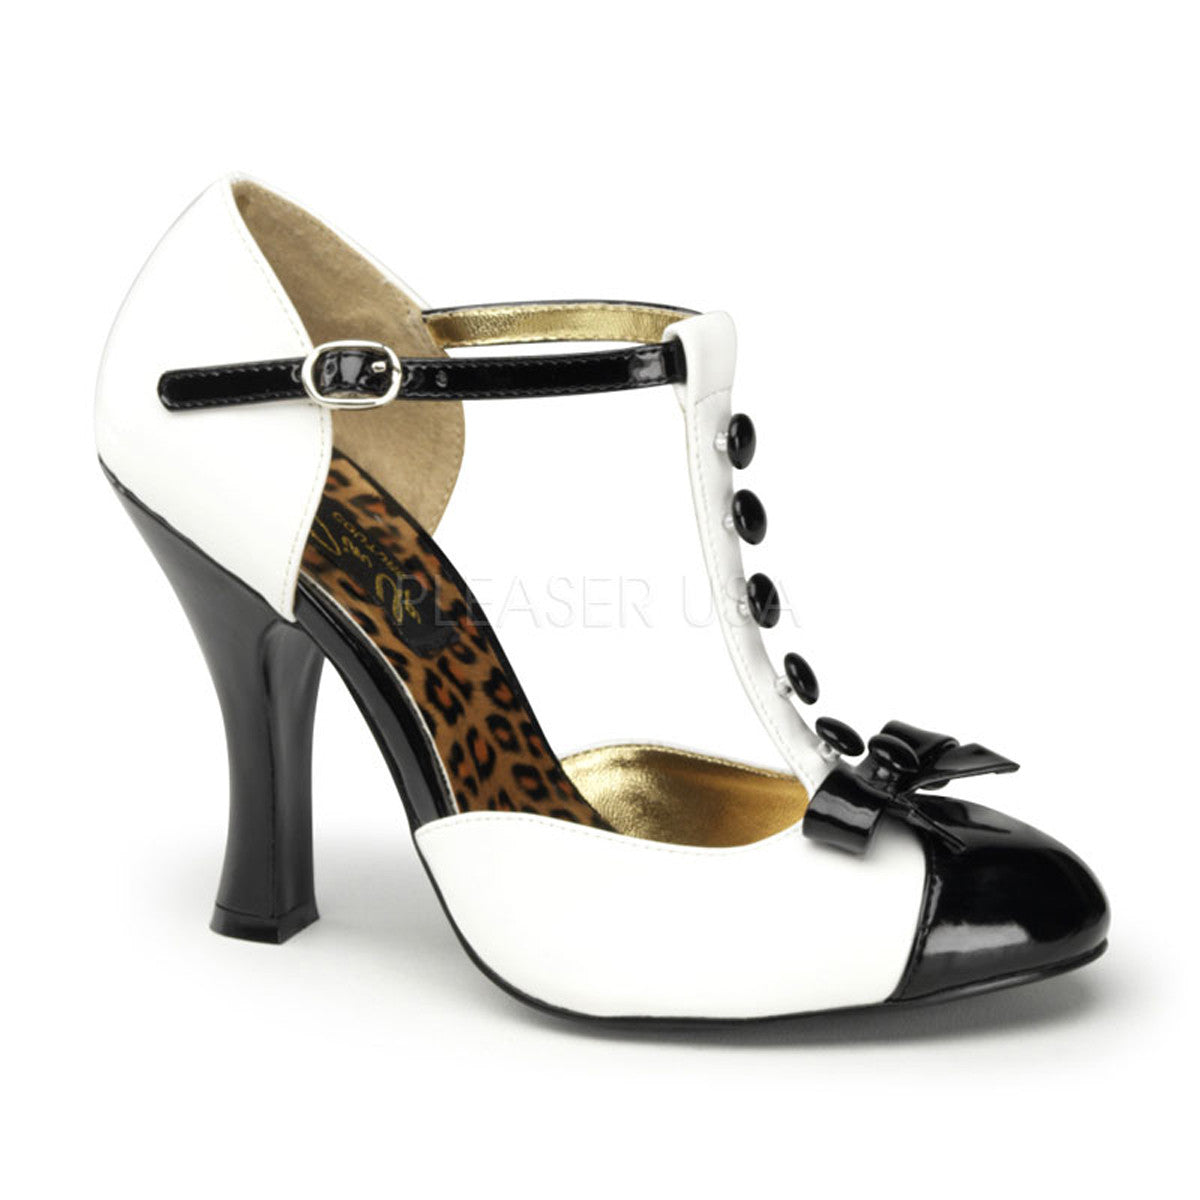 Pin Up Couture SMITTEN-10 White-Black Patent T-Strap D'orsay Pumps - Shoecup.com - 1